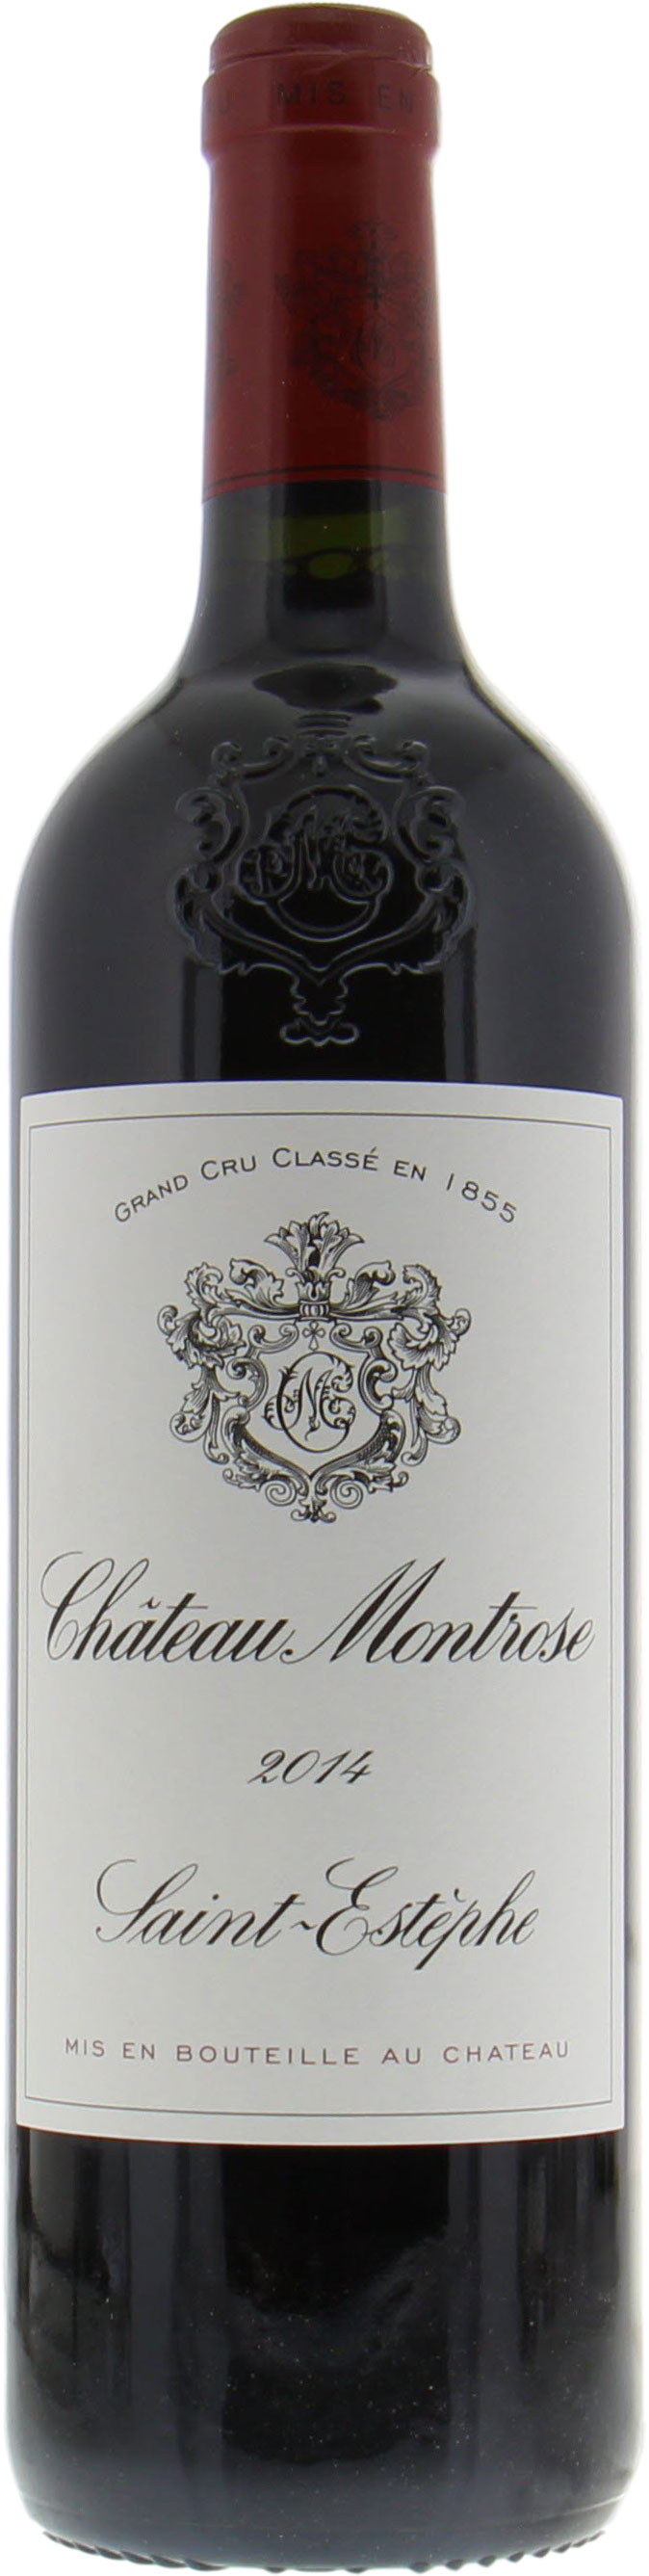 Chateau Montrose 2014 | Buy Online | Best of Wines | Rotweine